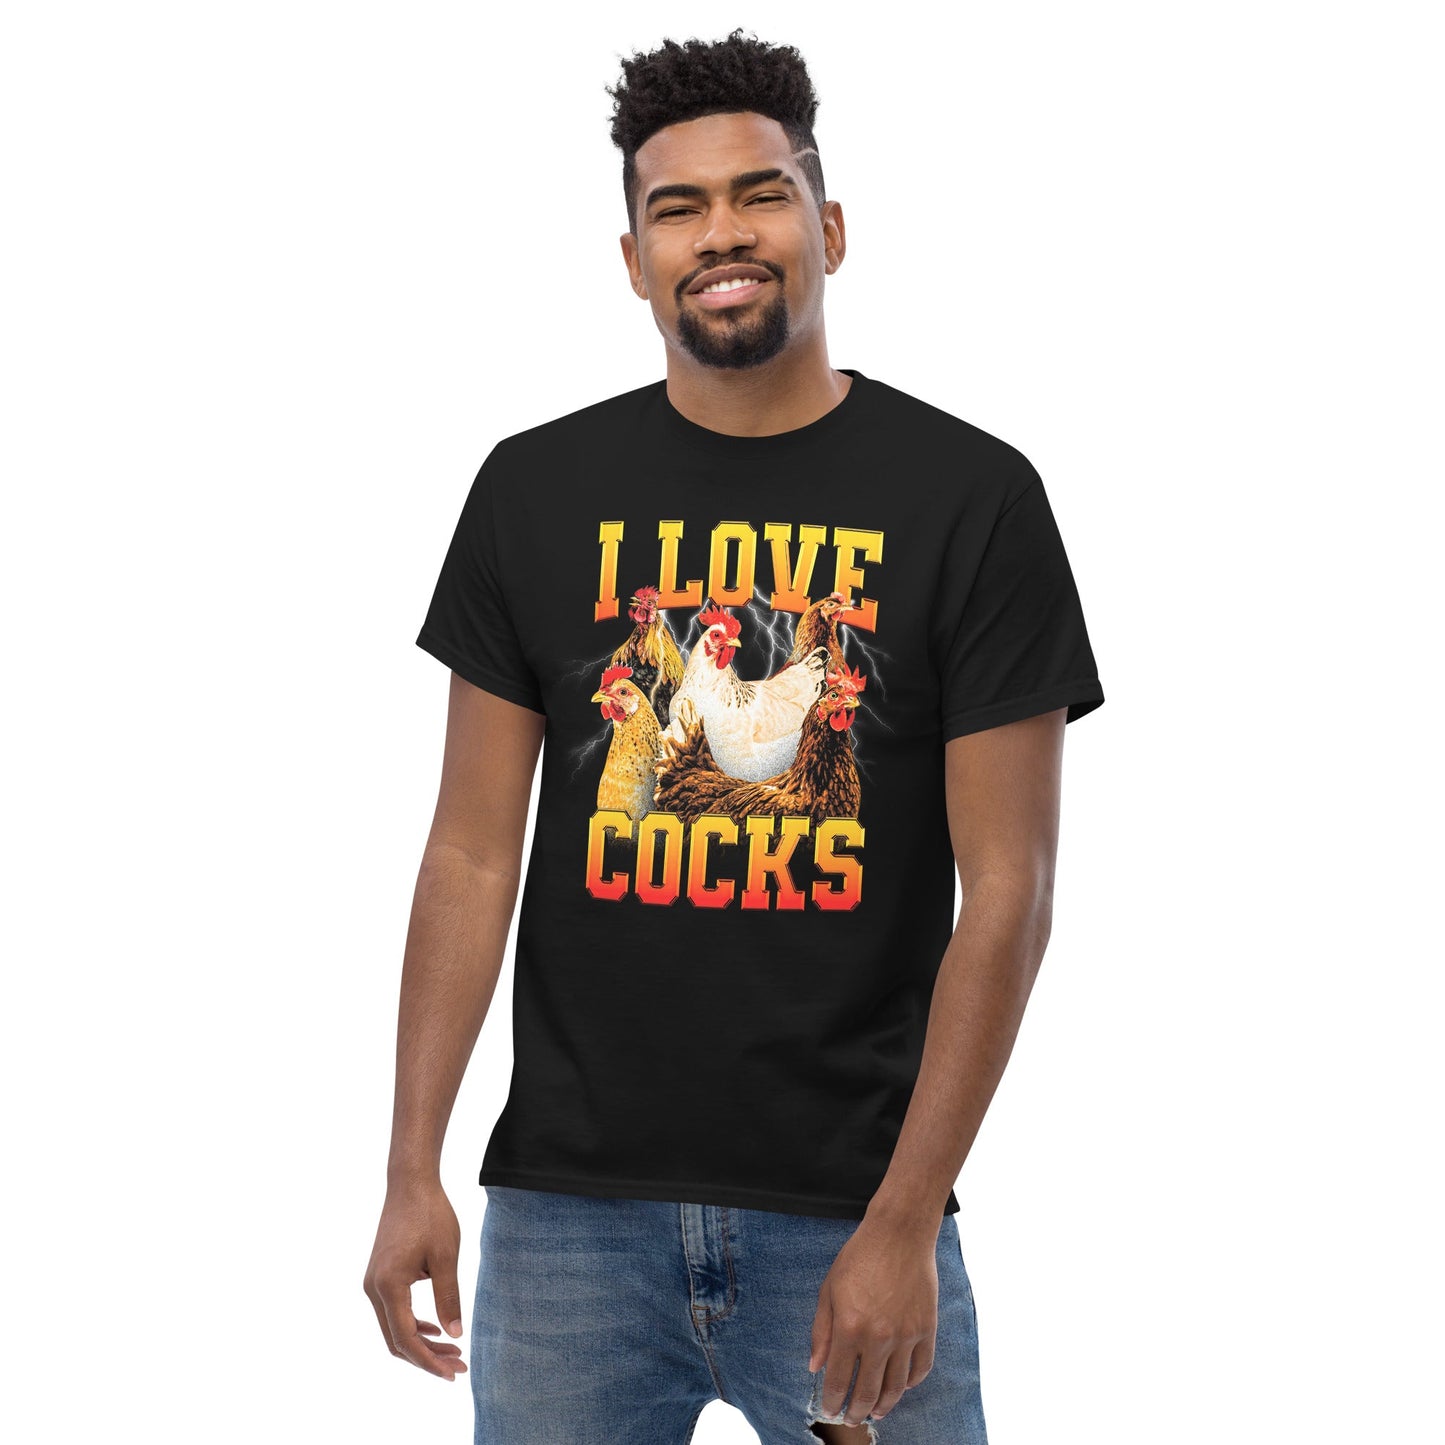 I Love Cocks T-Shirt!